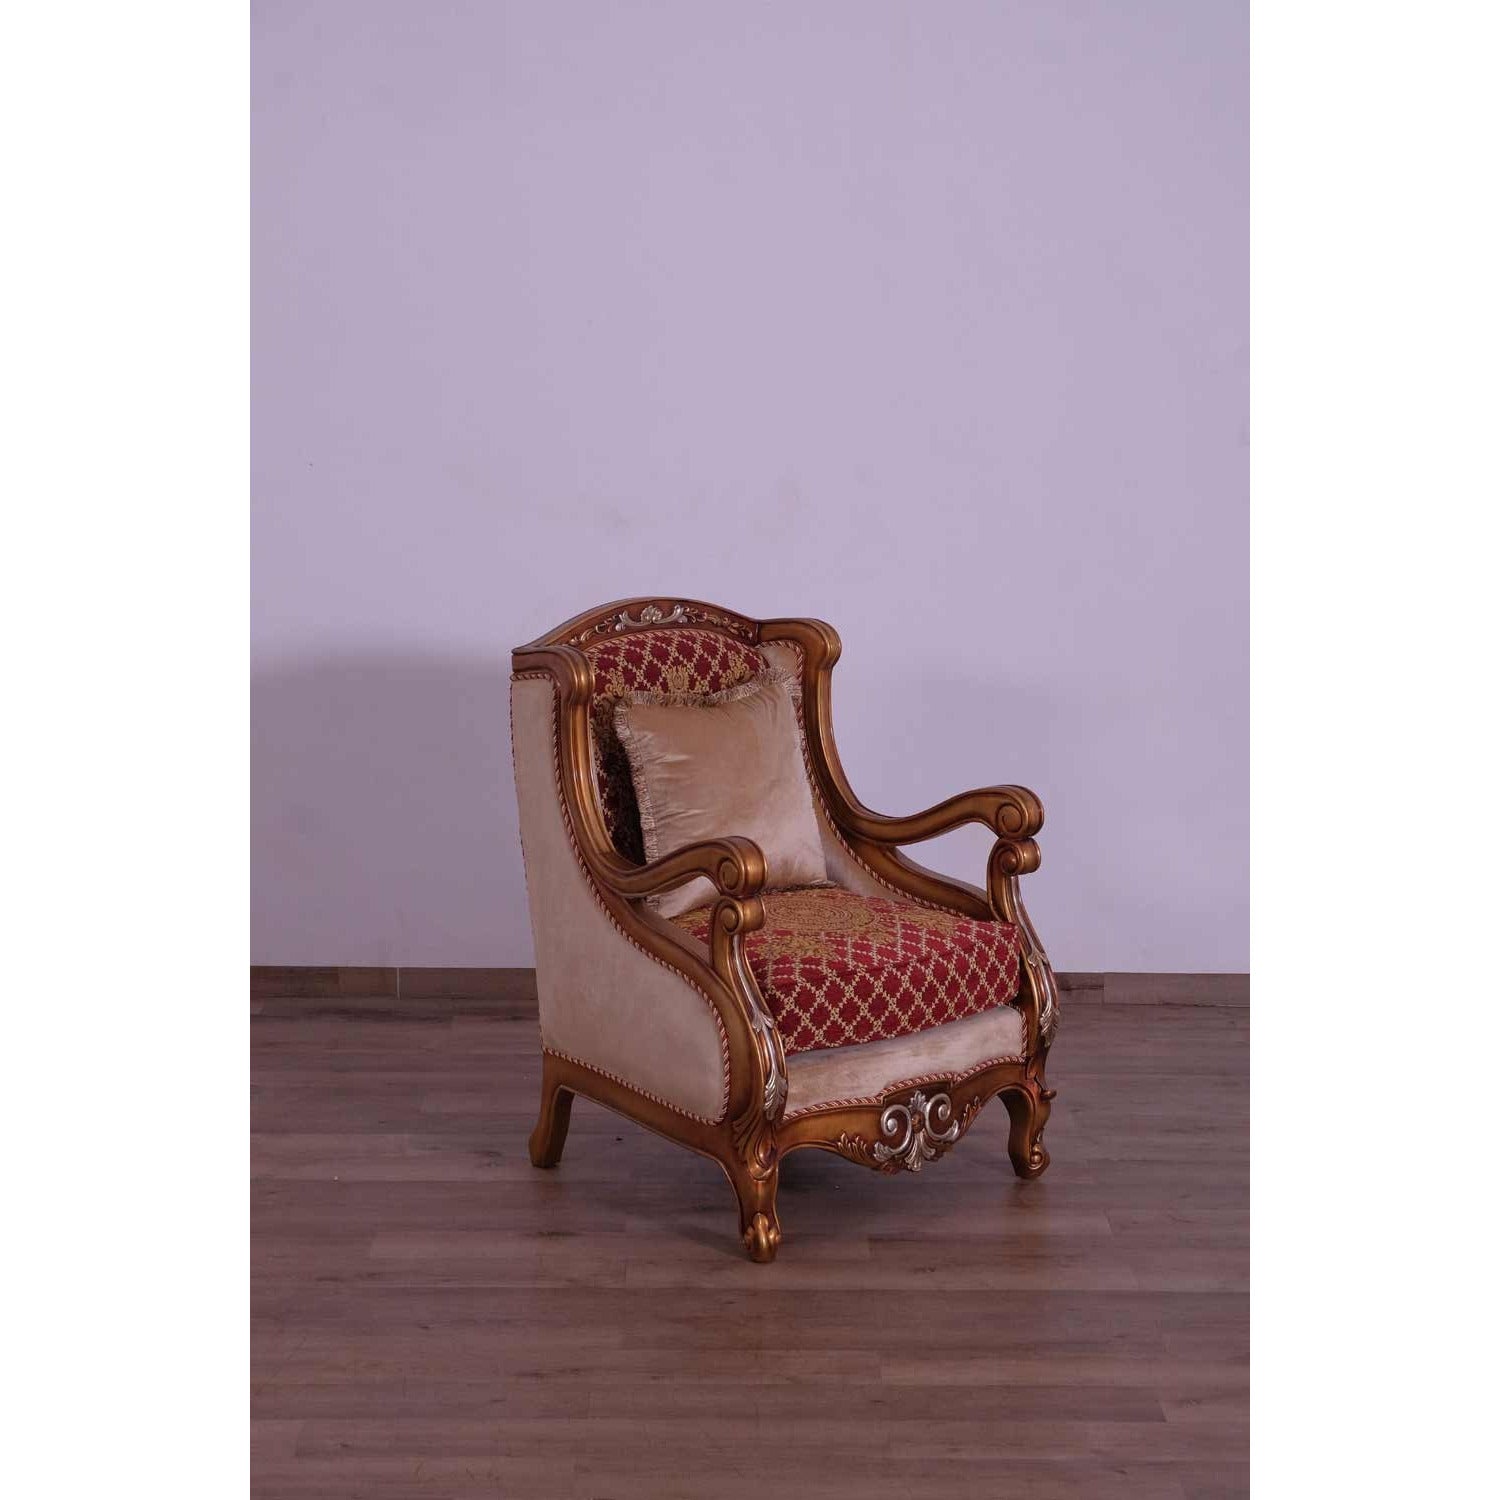 European Furniture - Raffaello III 2 Piece Luxury Sofa Set in Red & Gold - 41022-SC - New Star Living